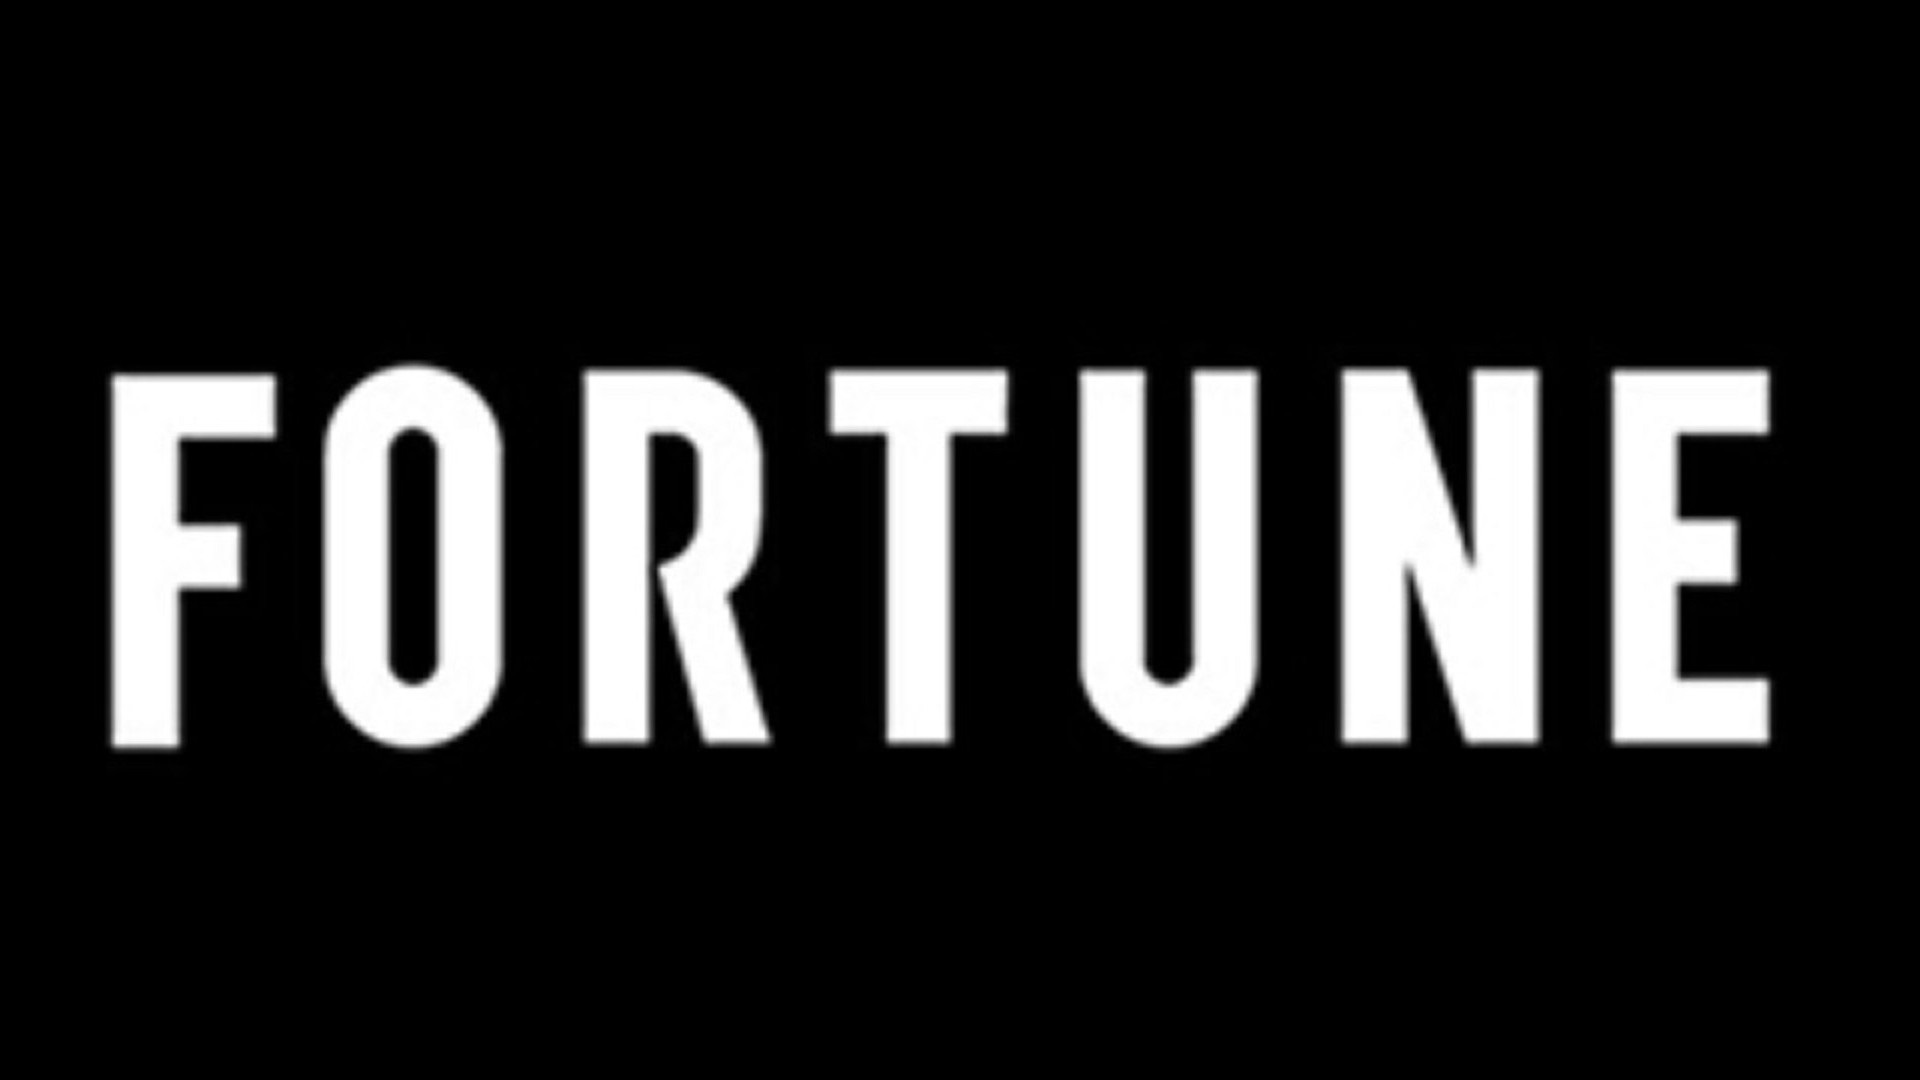 revista Fortune - logo